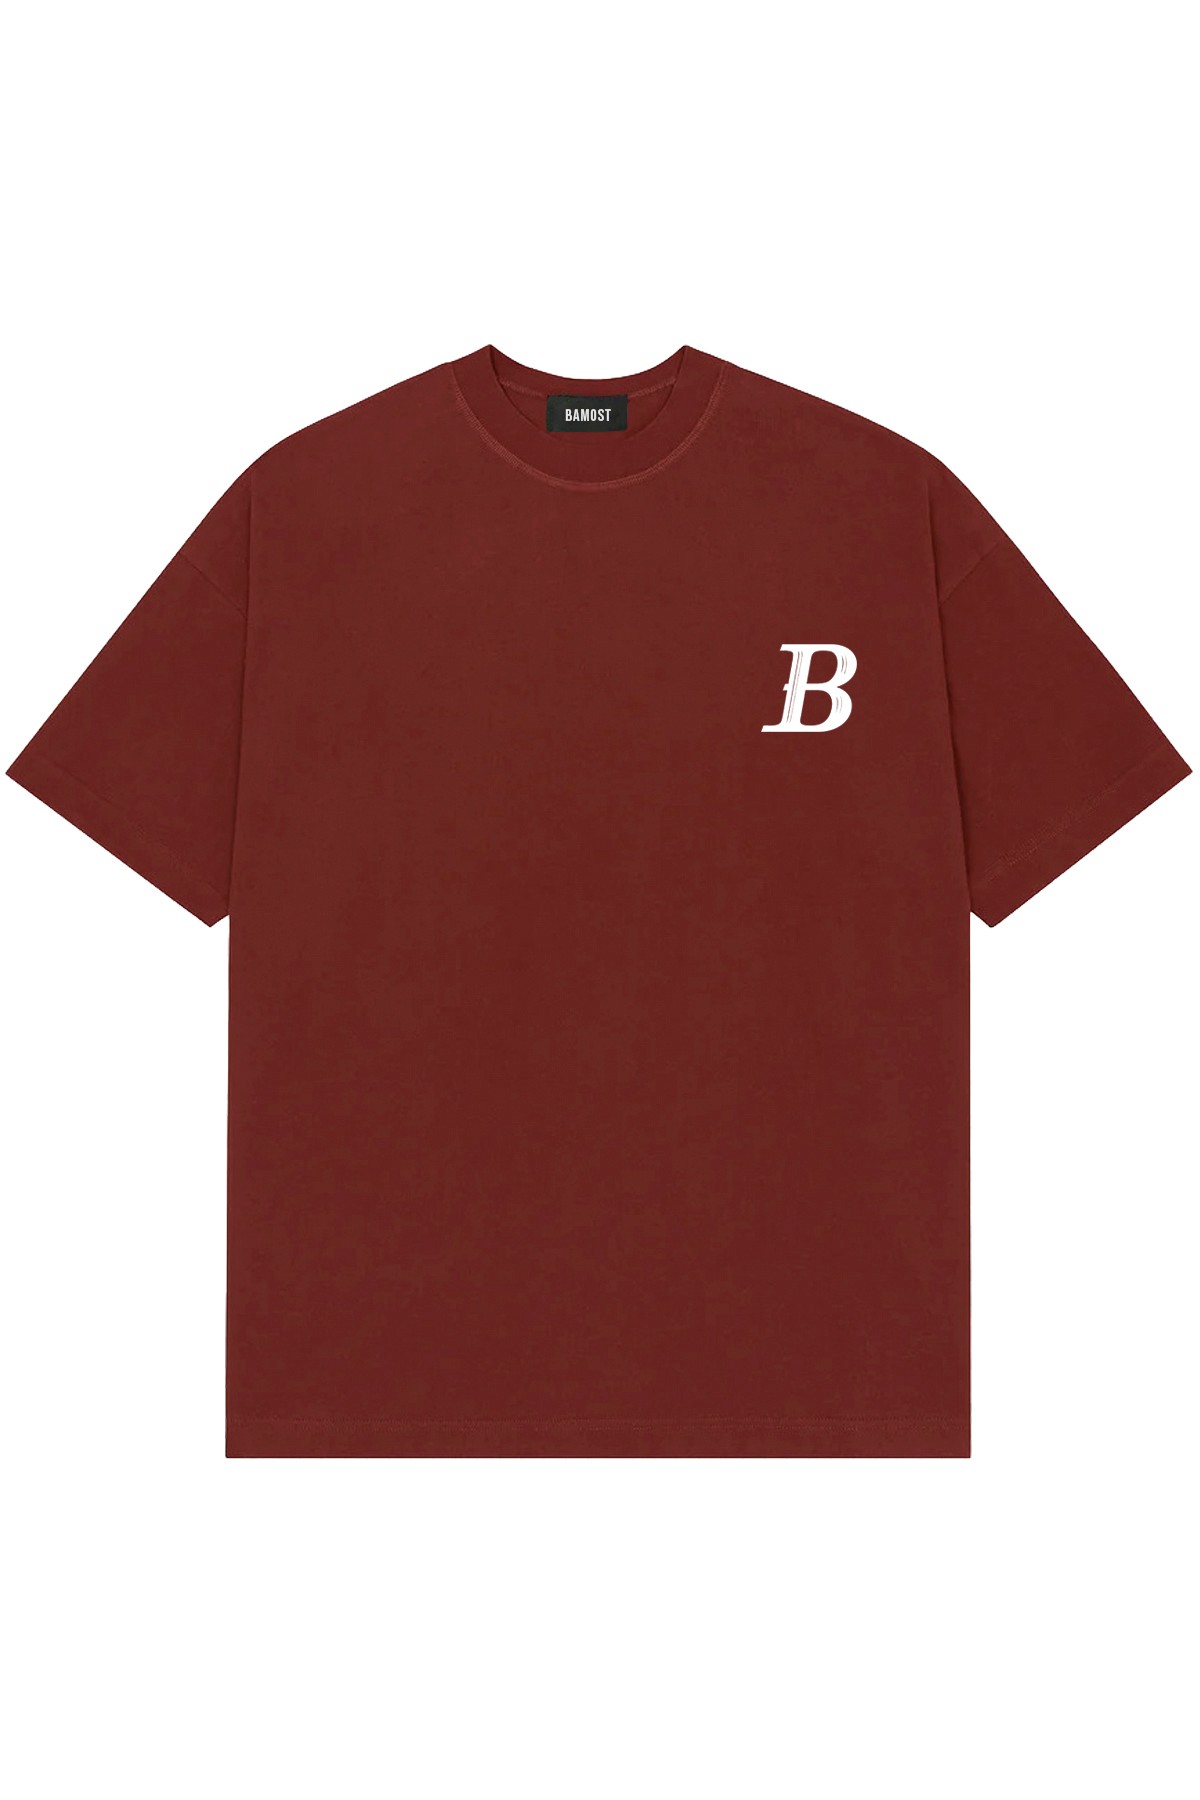 C Club - Comfort T-Shirt - BORDO